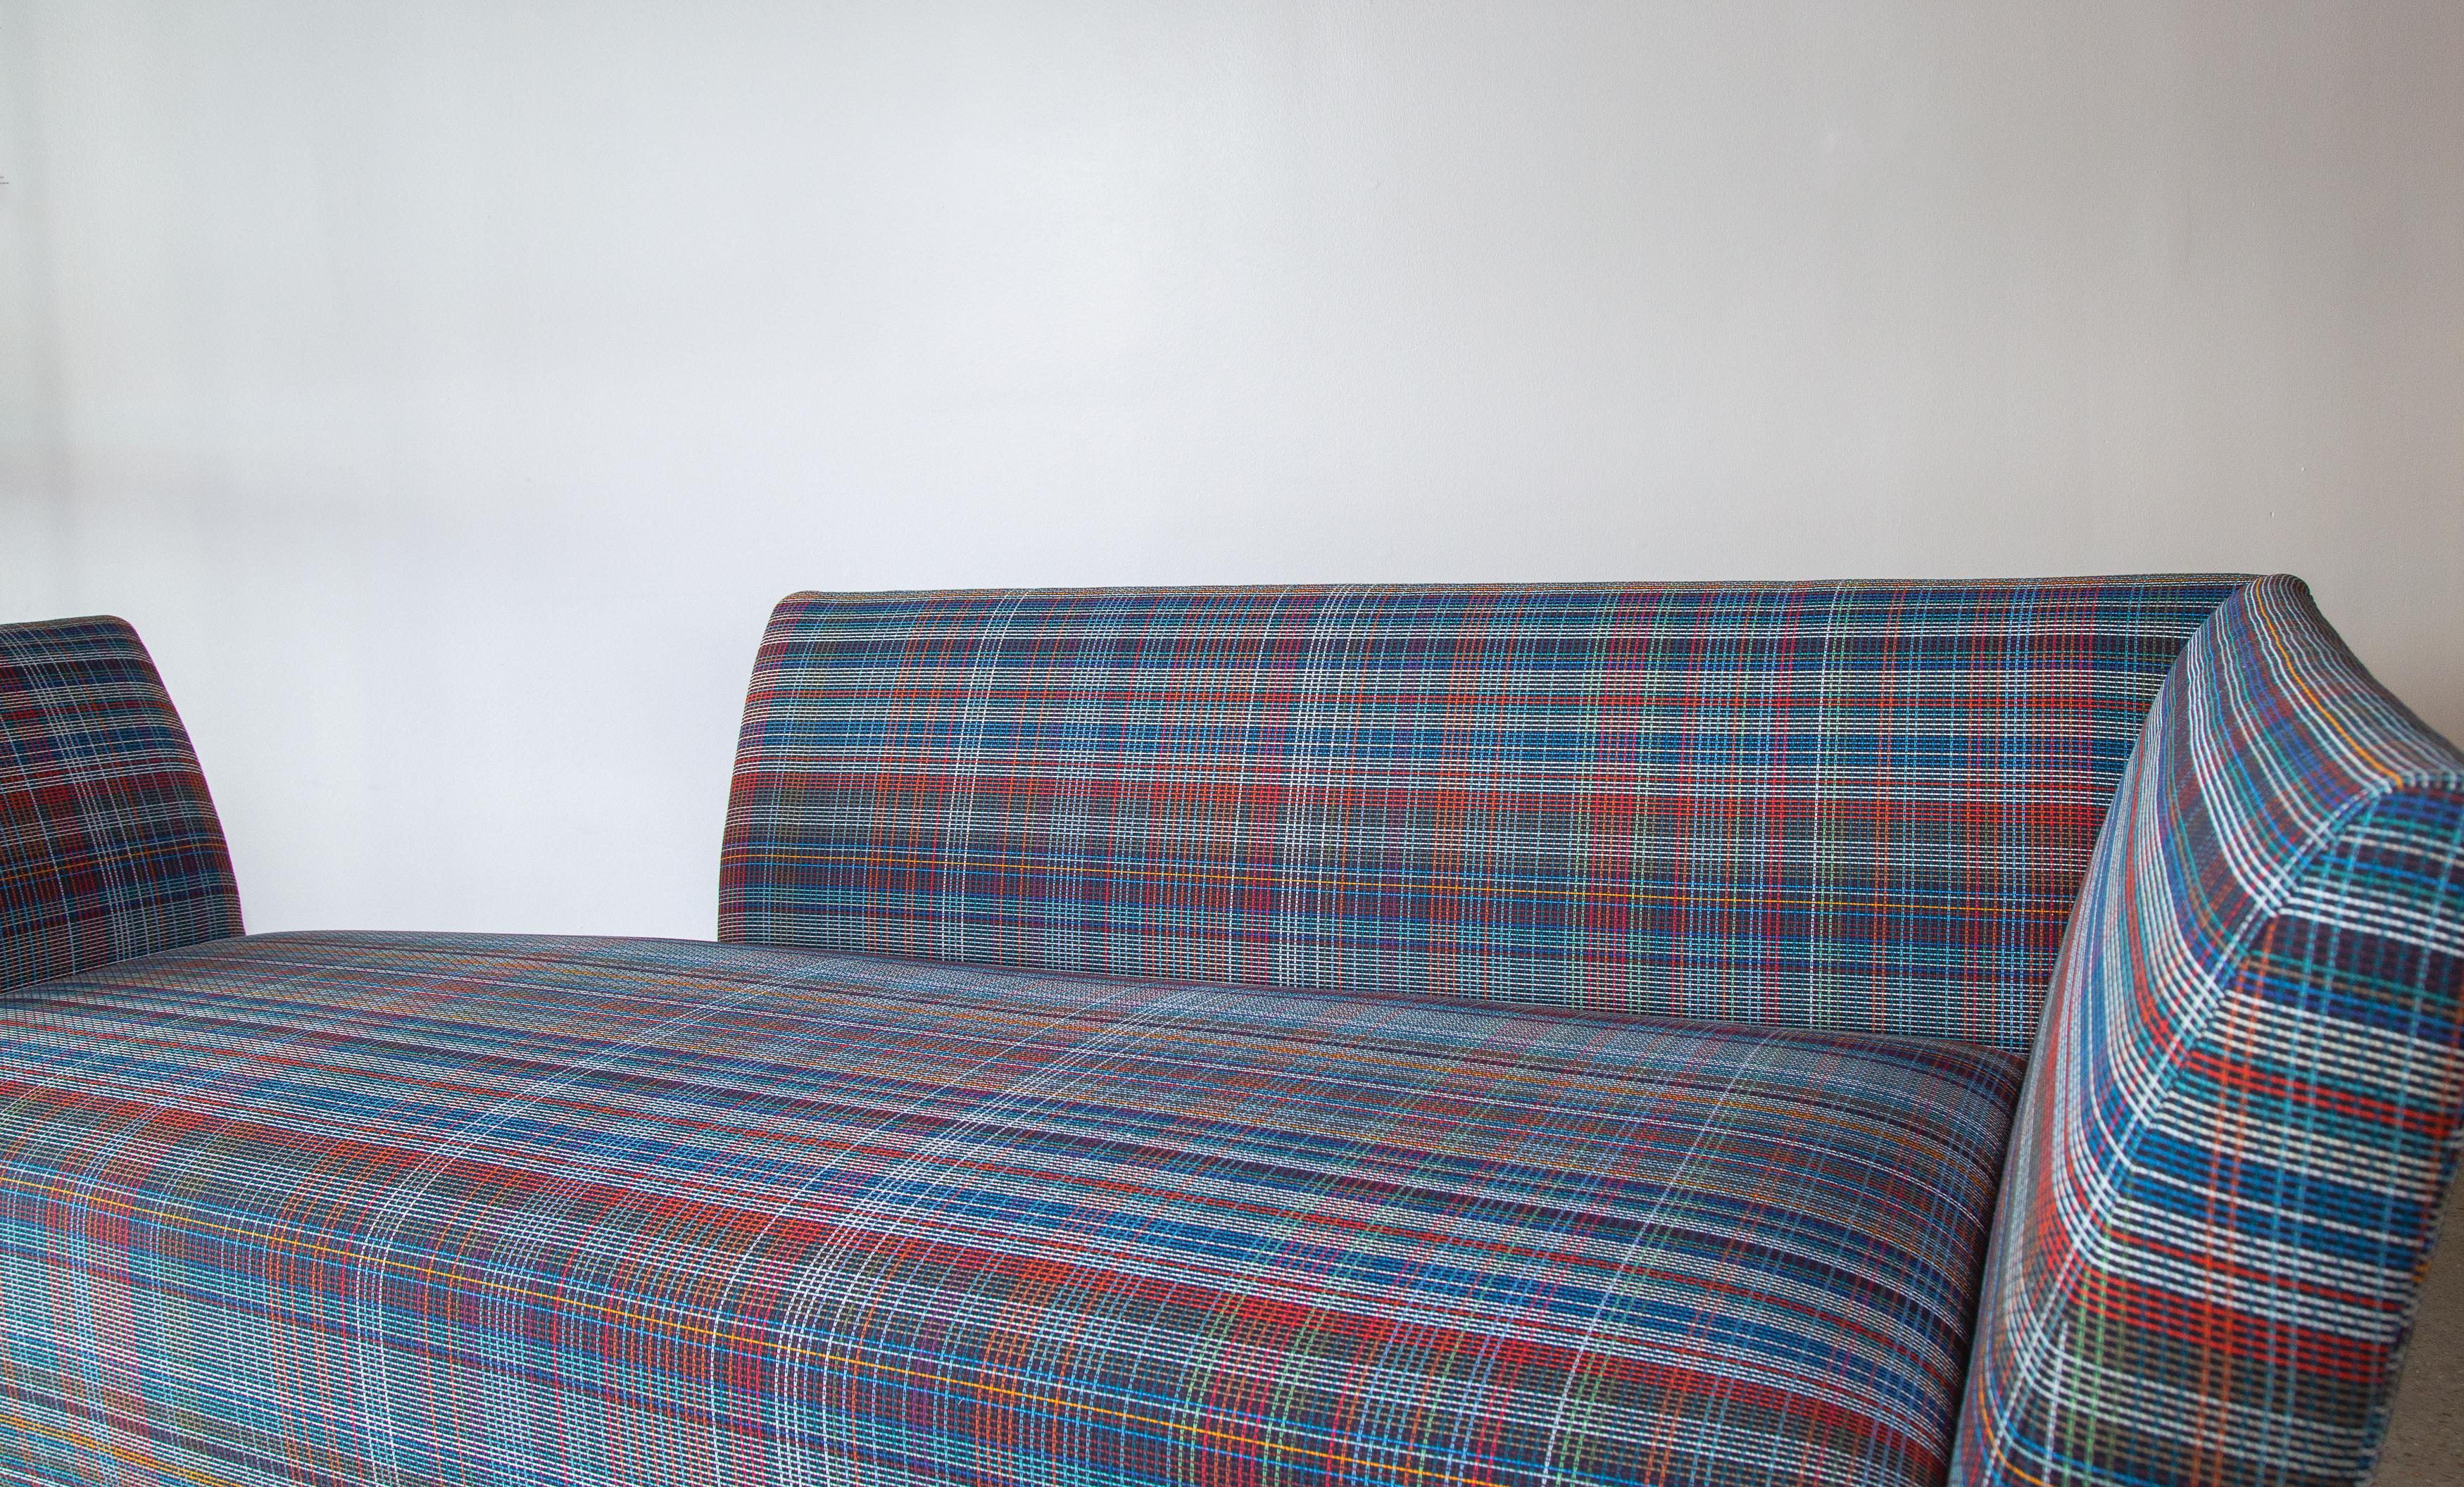 Modern Joe D'Urso Island Sofa for Donghia Knoll Plaidtastic Fabric tete-a-tete chaise For Sale